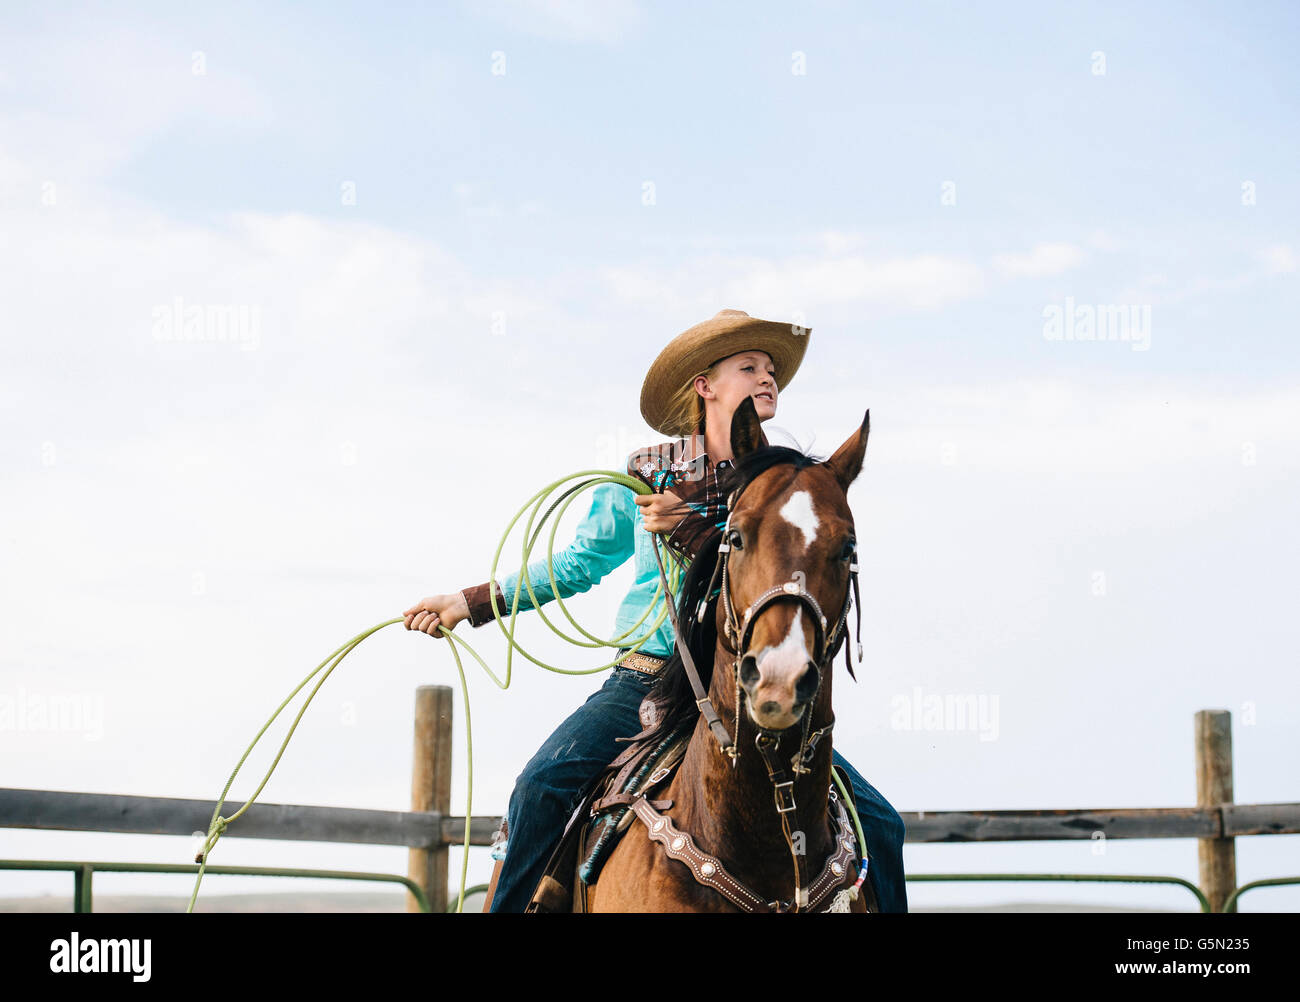 Caucasian cowgirl throwing lasso on horseback Stock Photo